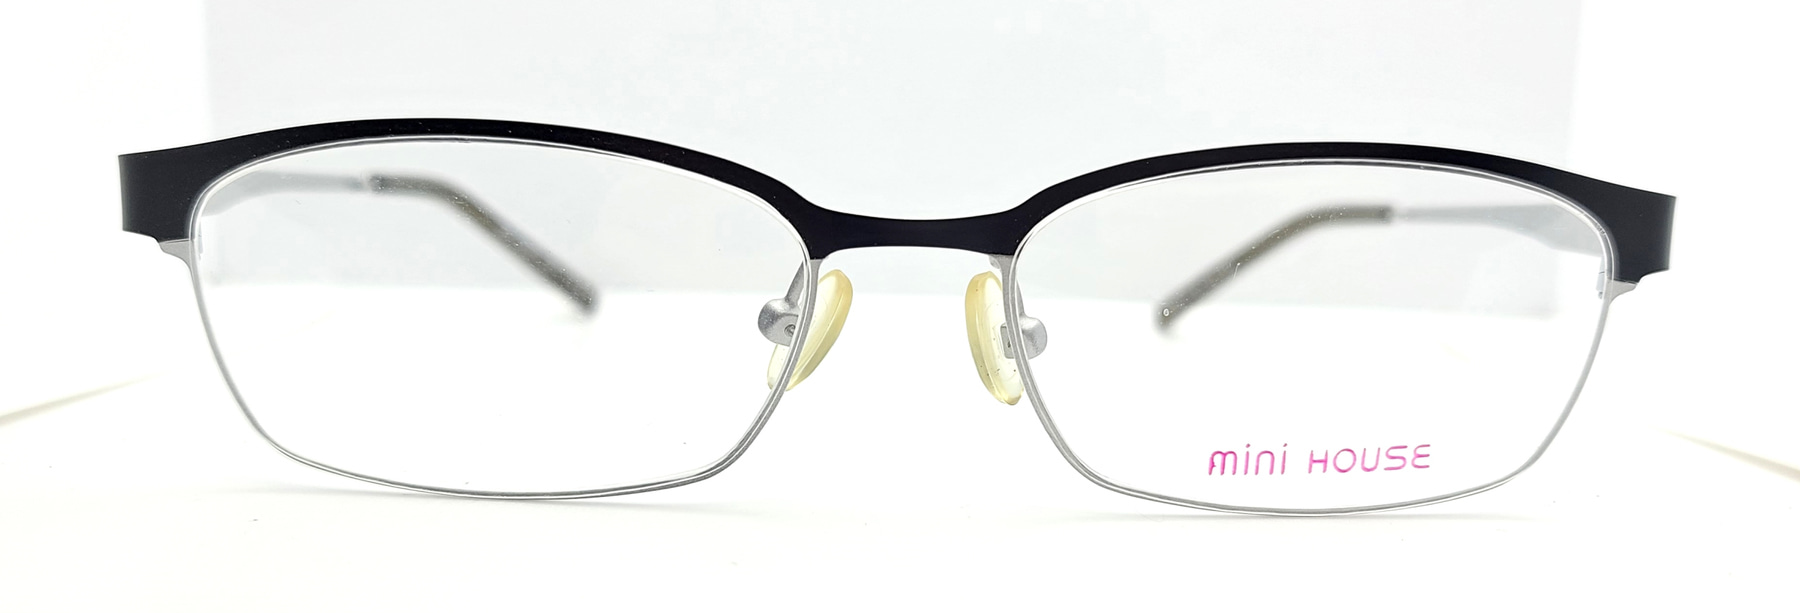 MINIHOUSE M-03, Korean glasses, sunglasses, eyeglasses, glasses